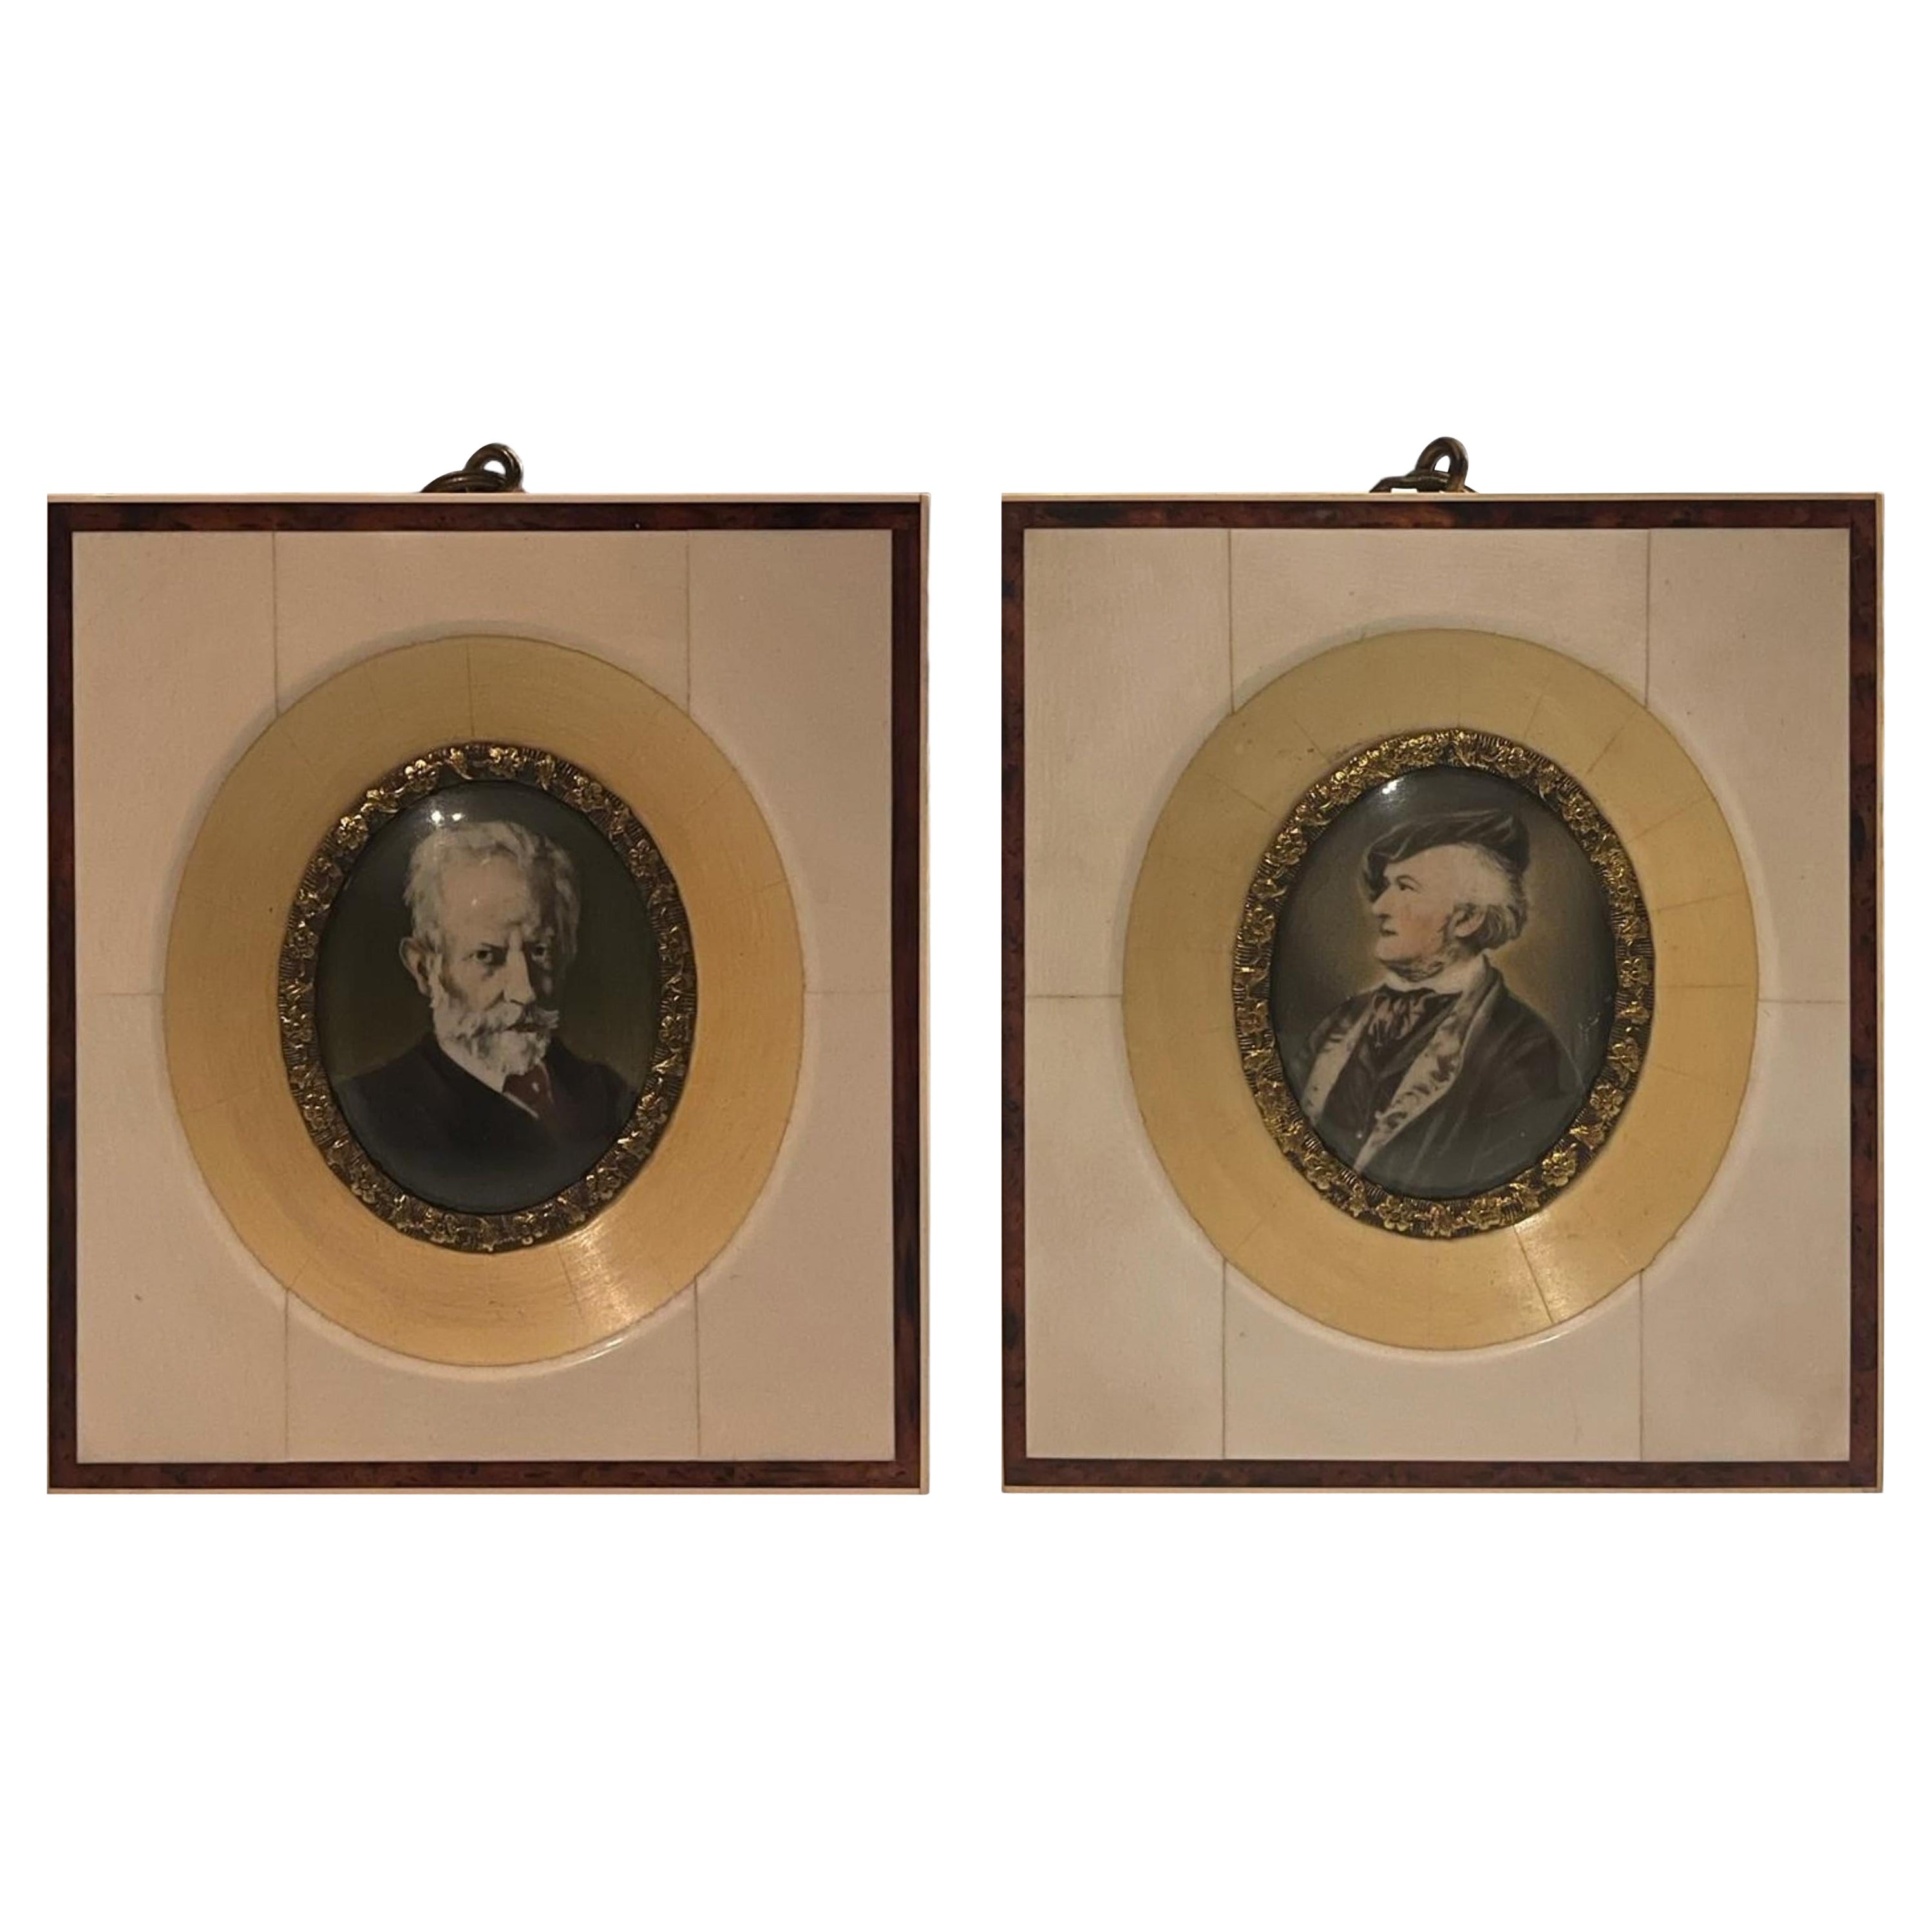 Pair of Antique portraits of Richard Wagner & Pjotr lljitsj Tsjaikovski 